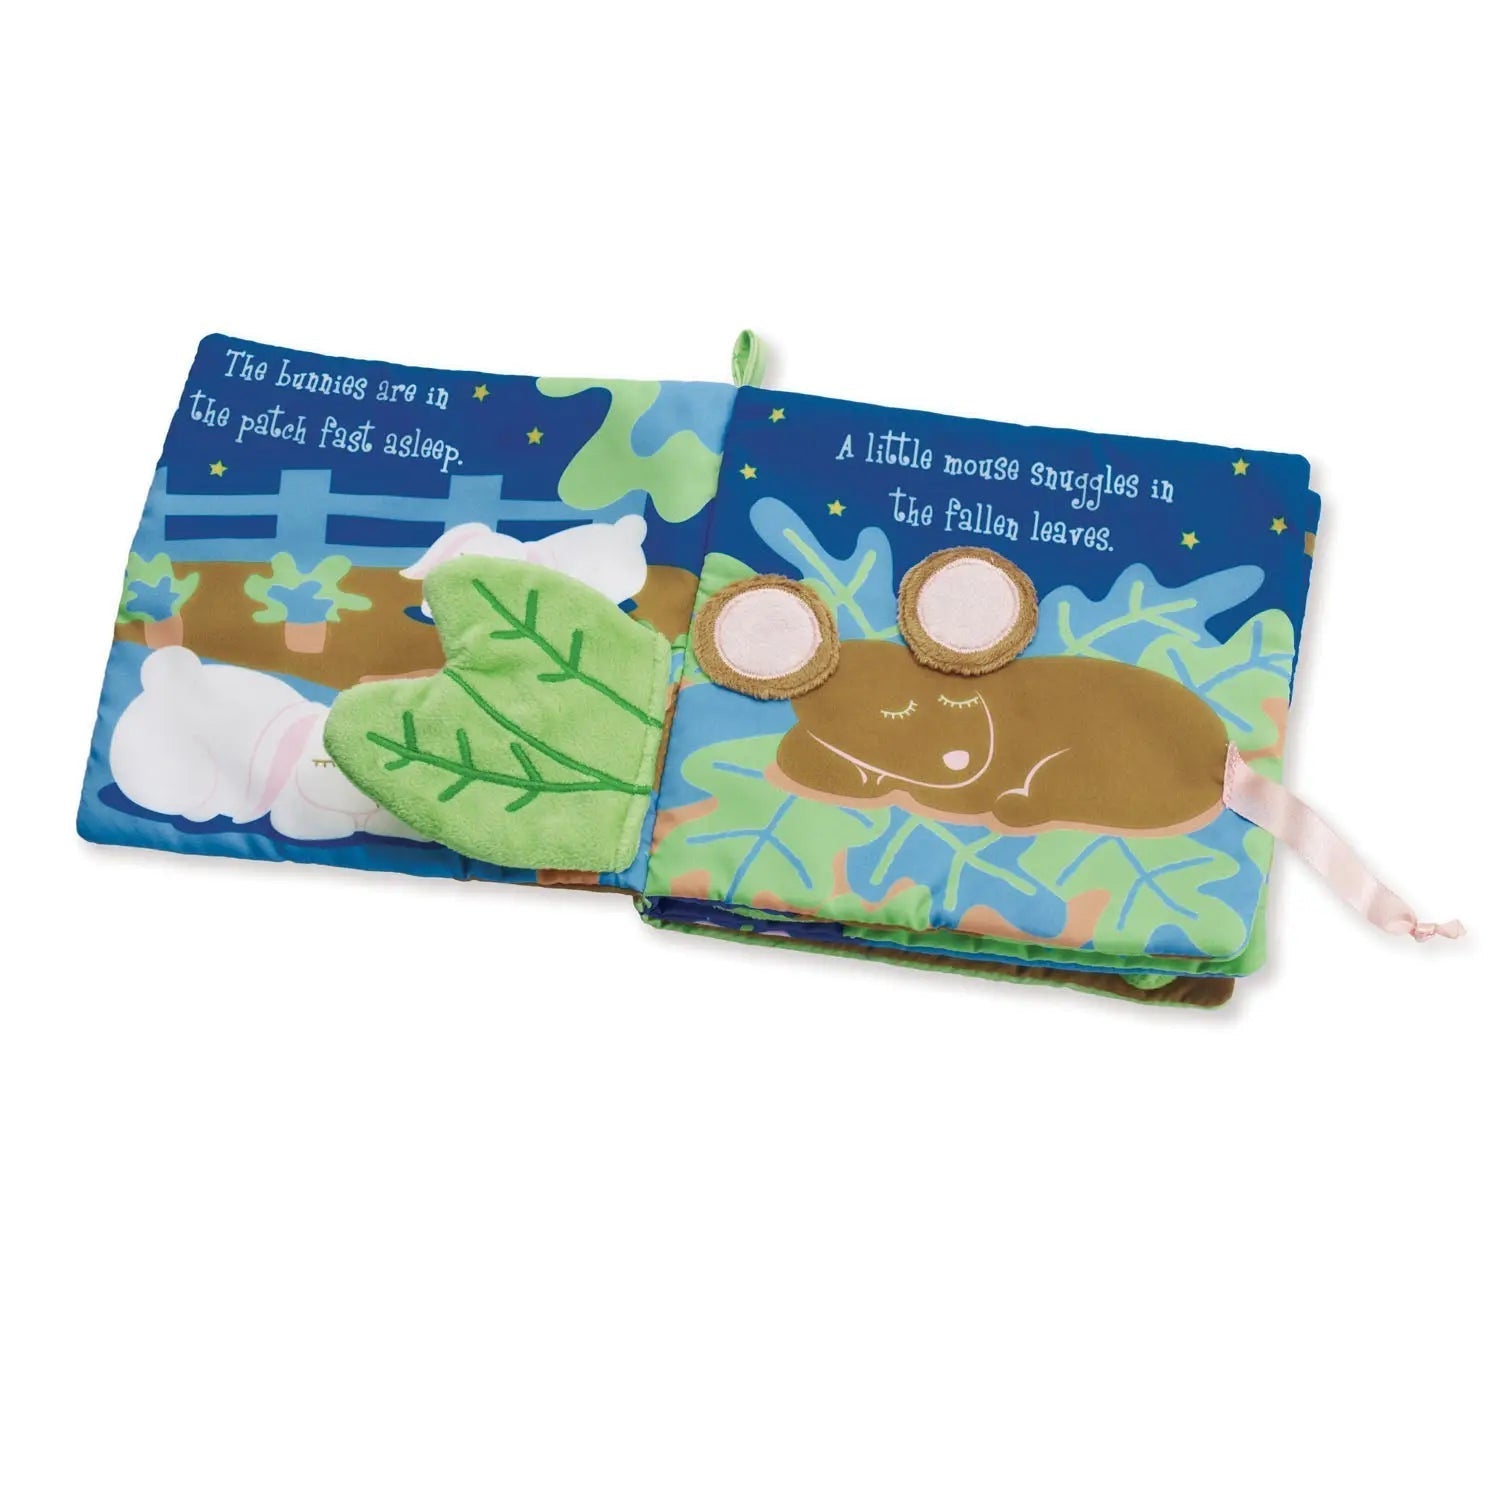 Manhattan Toy Snuggle Pods Goodnight My Sweet Pea Soft Sensory Book - ANB Baby -011964457236$20 - $50